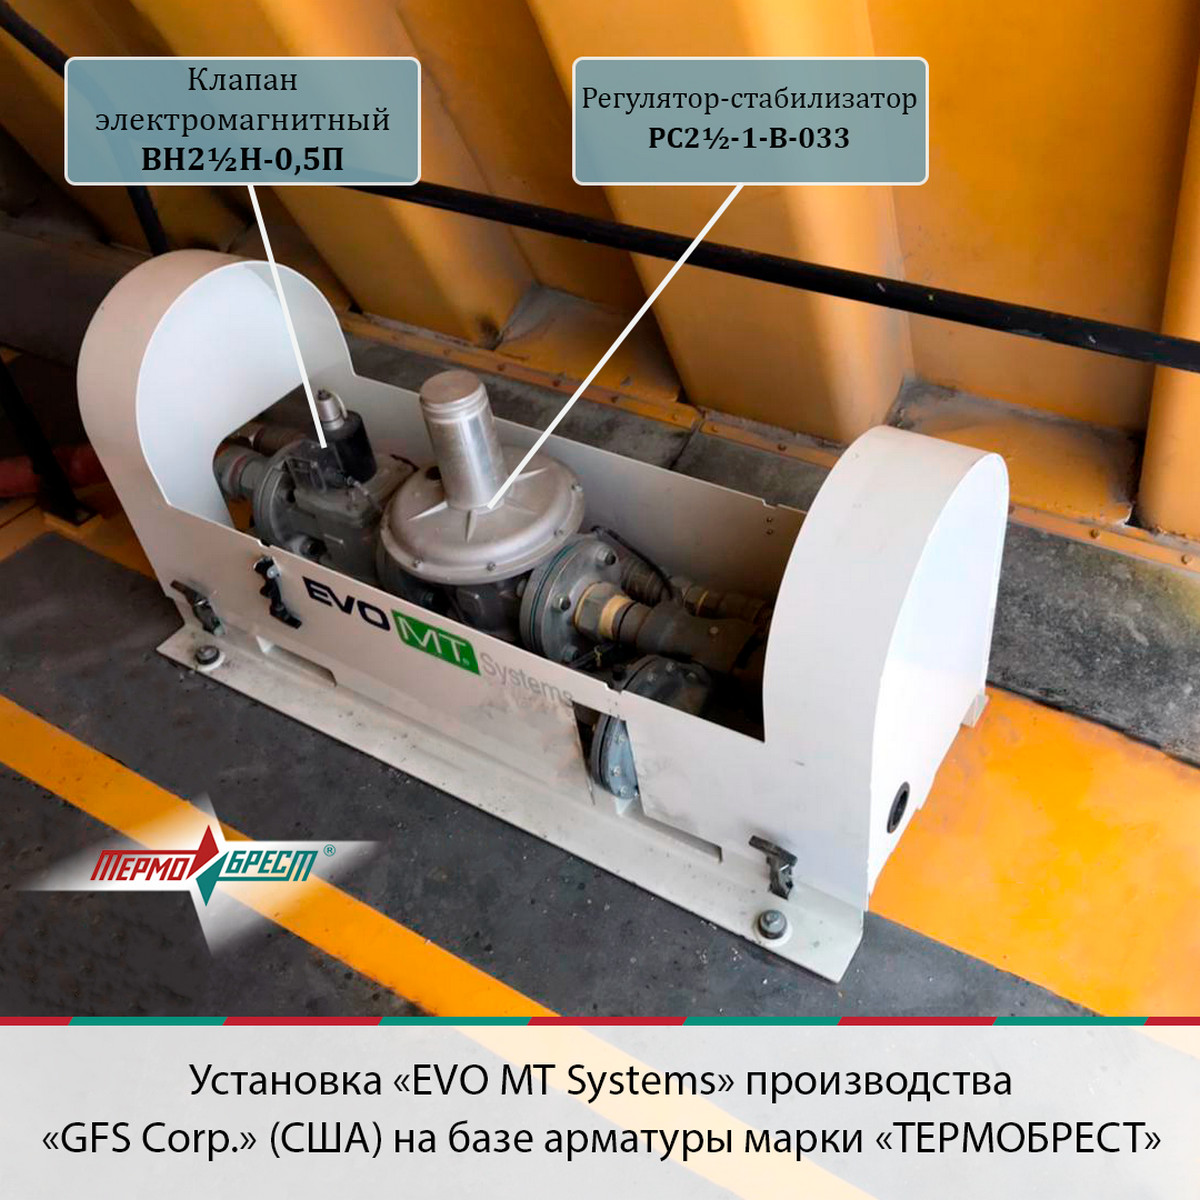 EVO MT Systems, GFS Corp. TERMOBREST